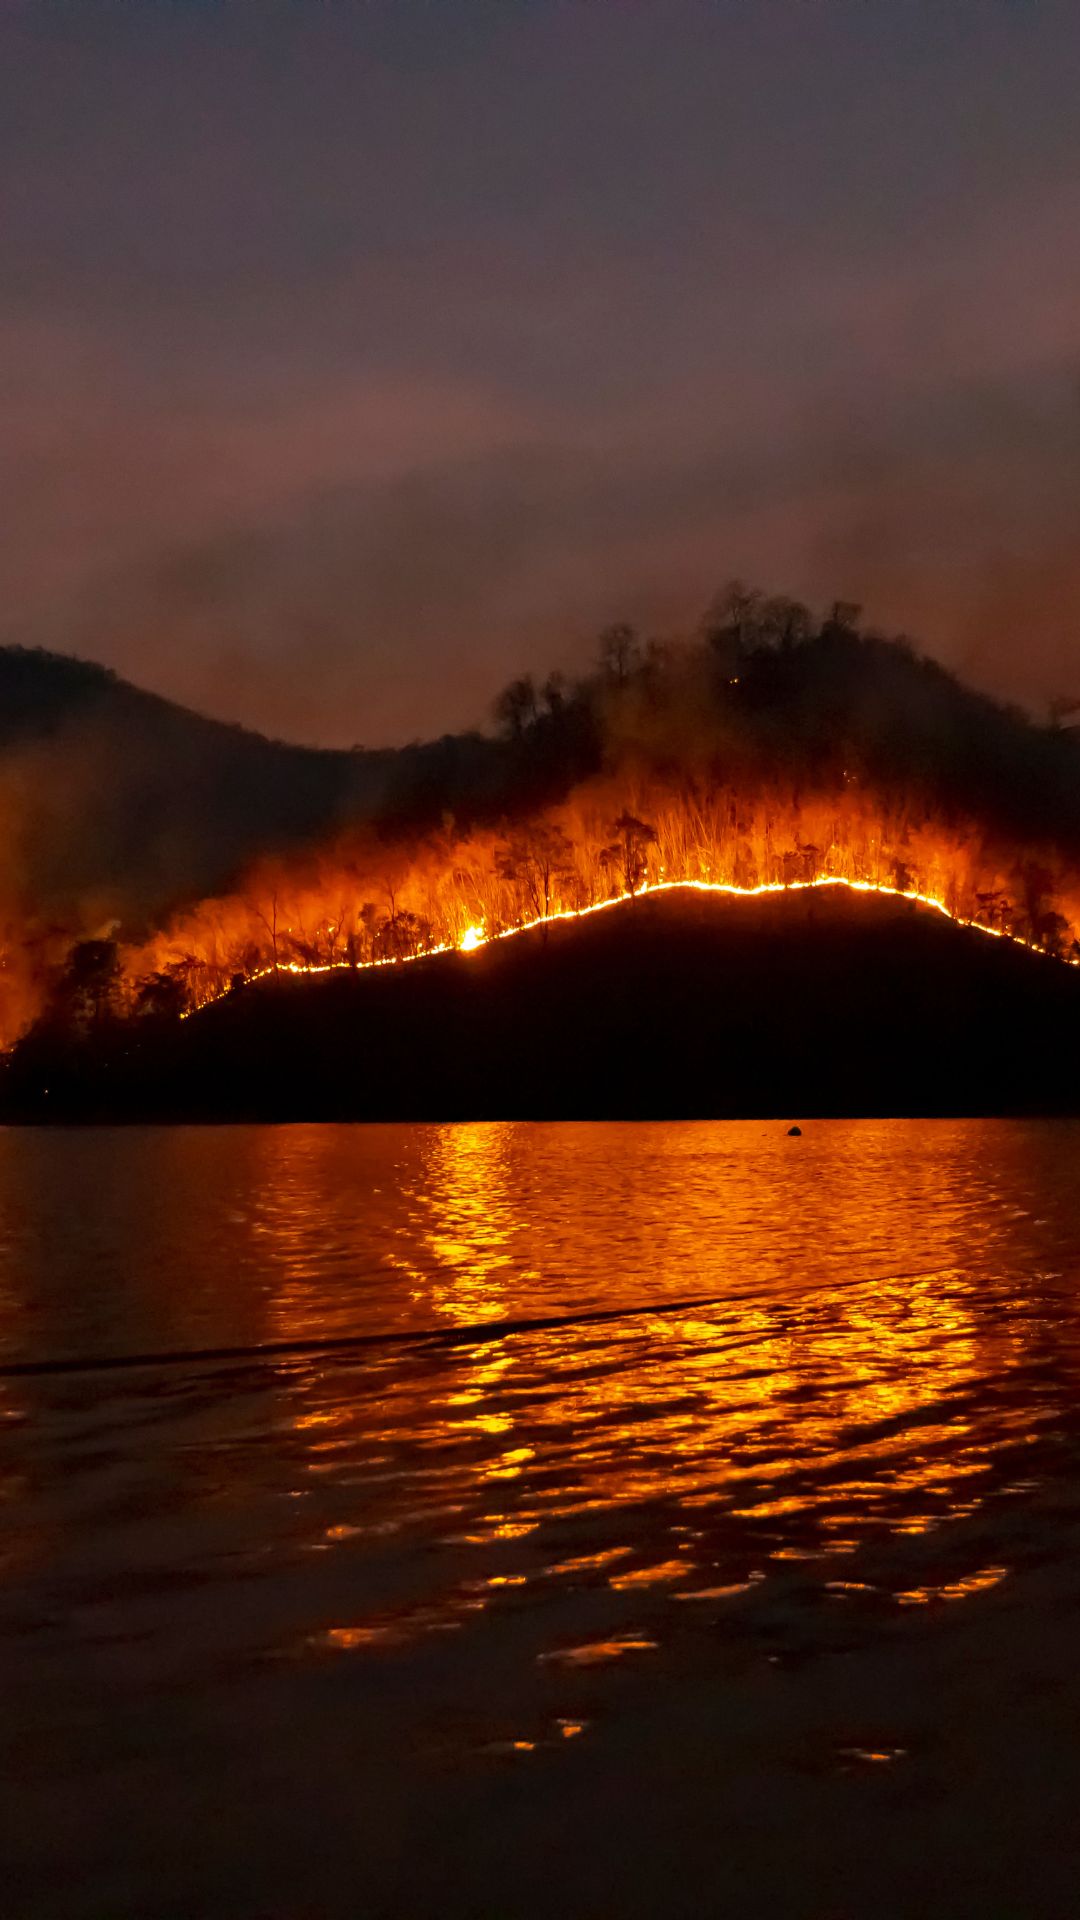 wildfire risk assessment